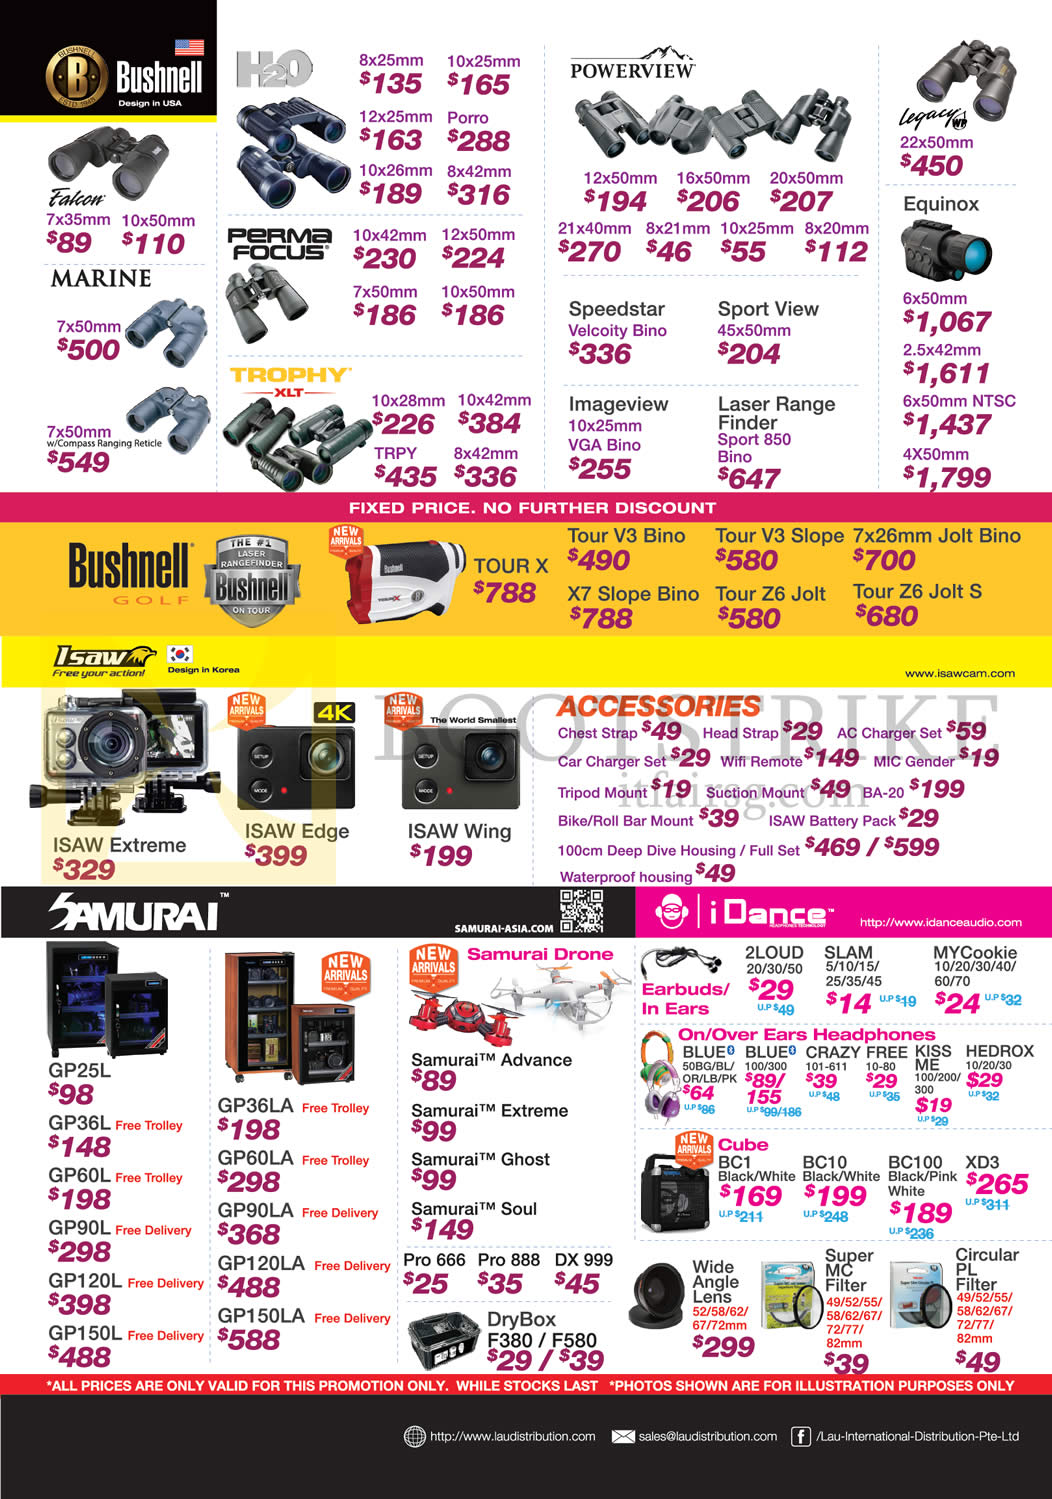 COMEX 2015 price list image brochure of Lau Intl Binoculars, Digital Cameras, Accessories, Bushnell, Samurai, IDance